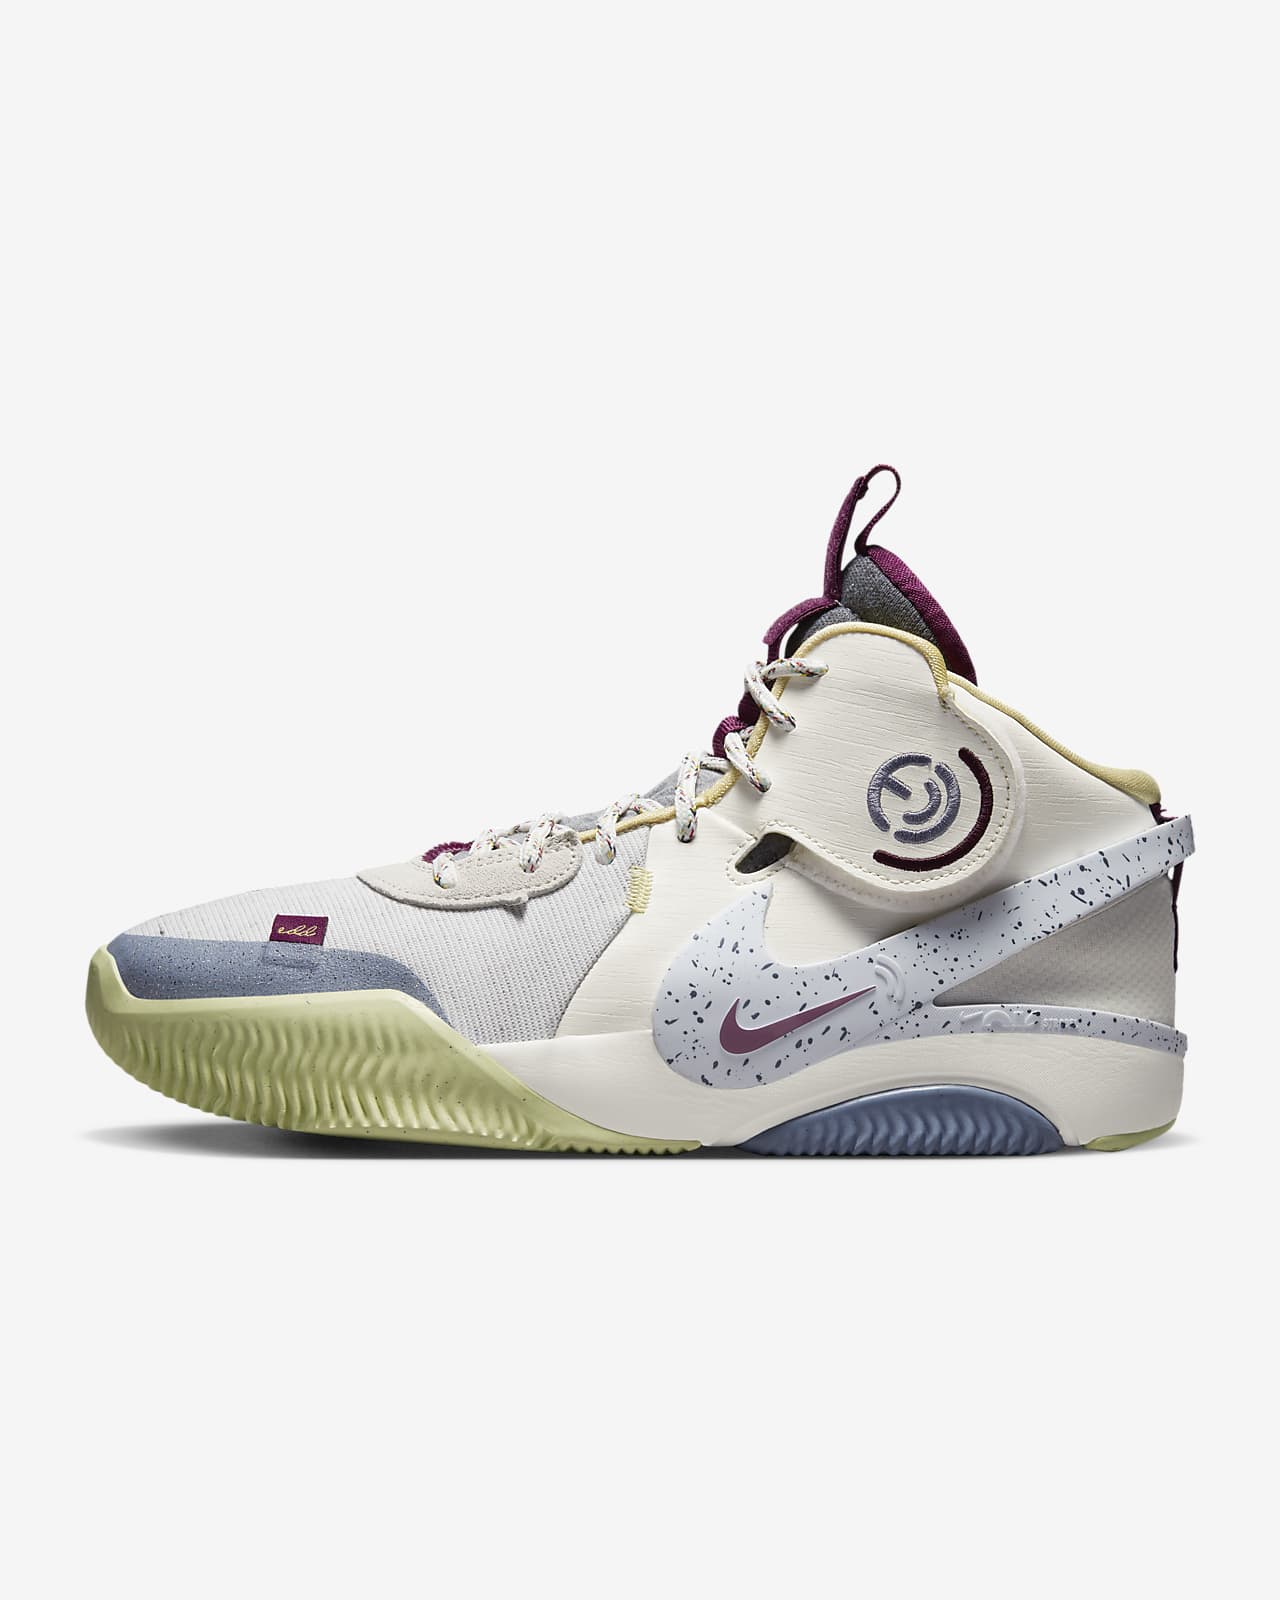 Nike Air Deldon "Deldon Designs" Basketball Shoes